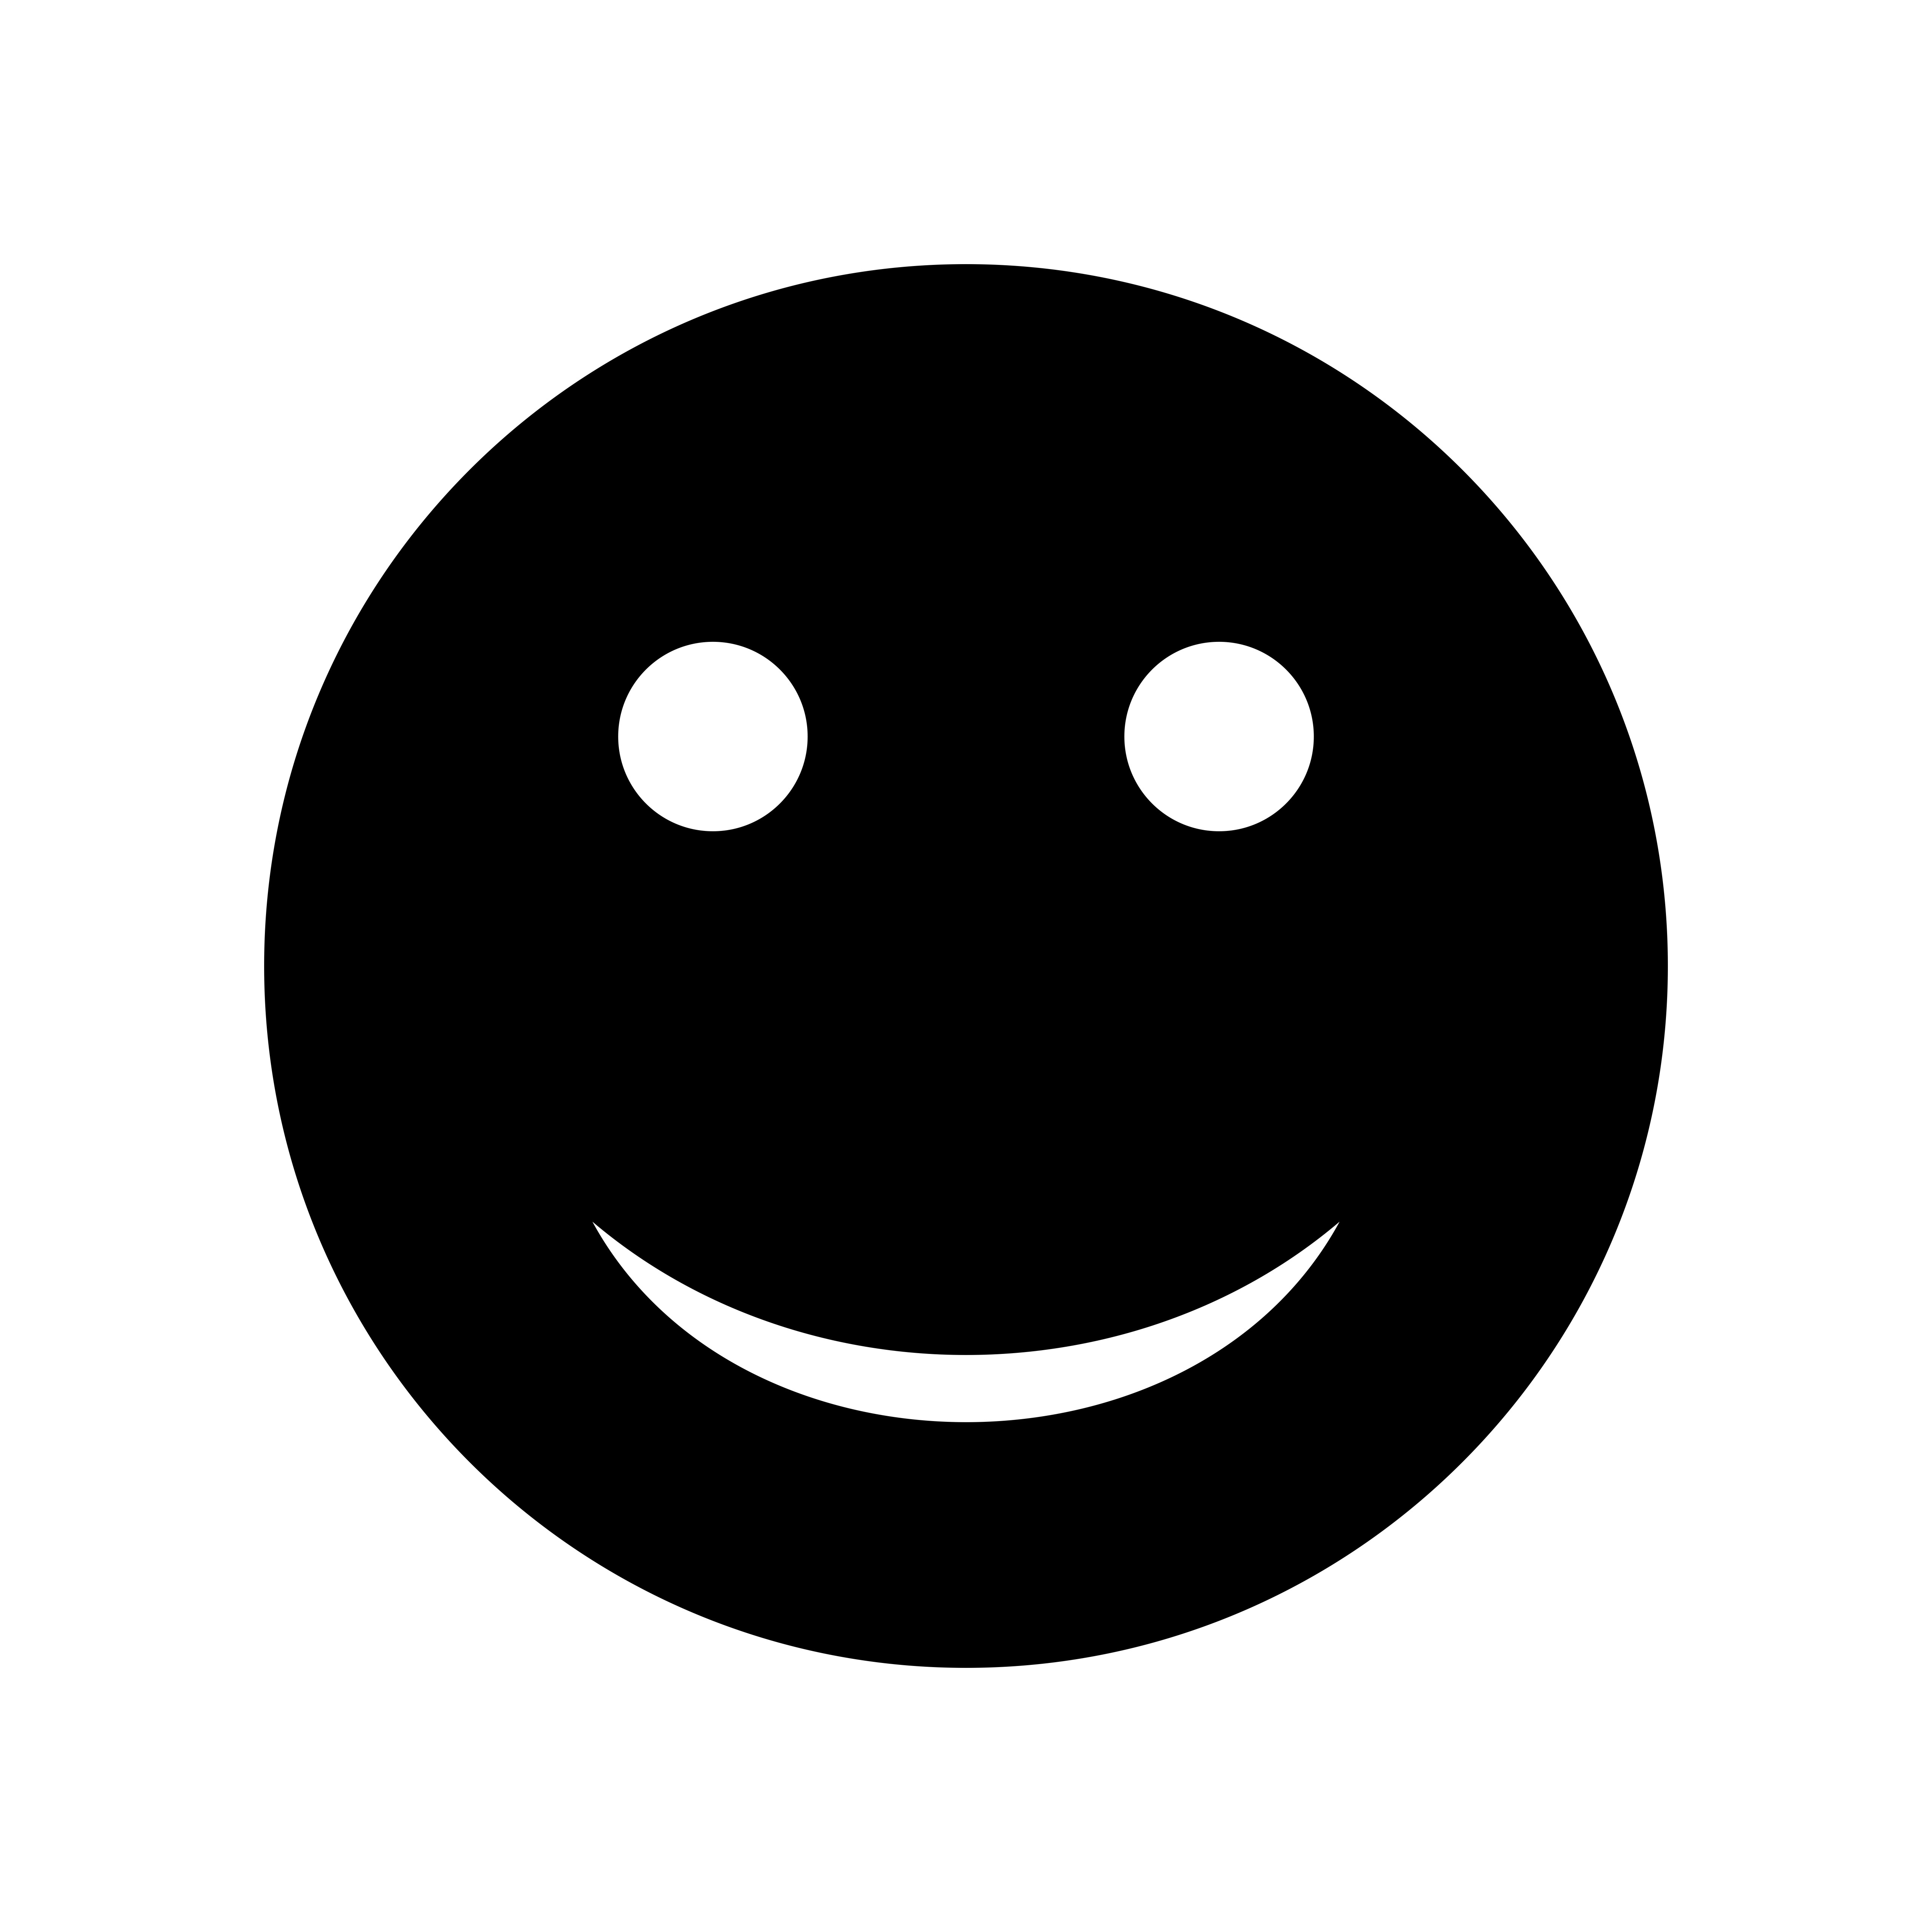 Download Happy Emoji Vector Icon - Download Free Vectors, Clipart Graphics & Vector Art